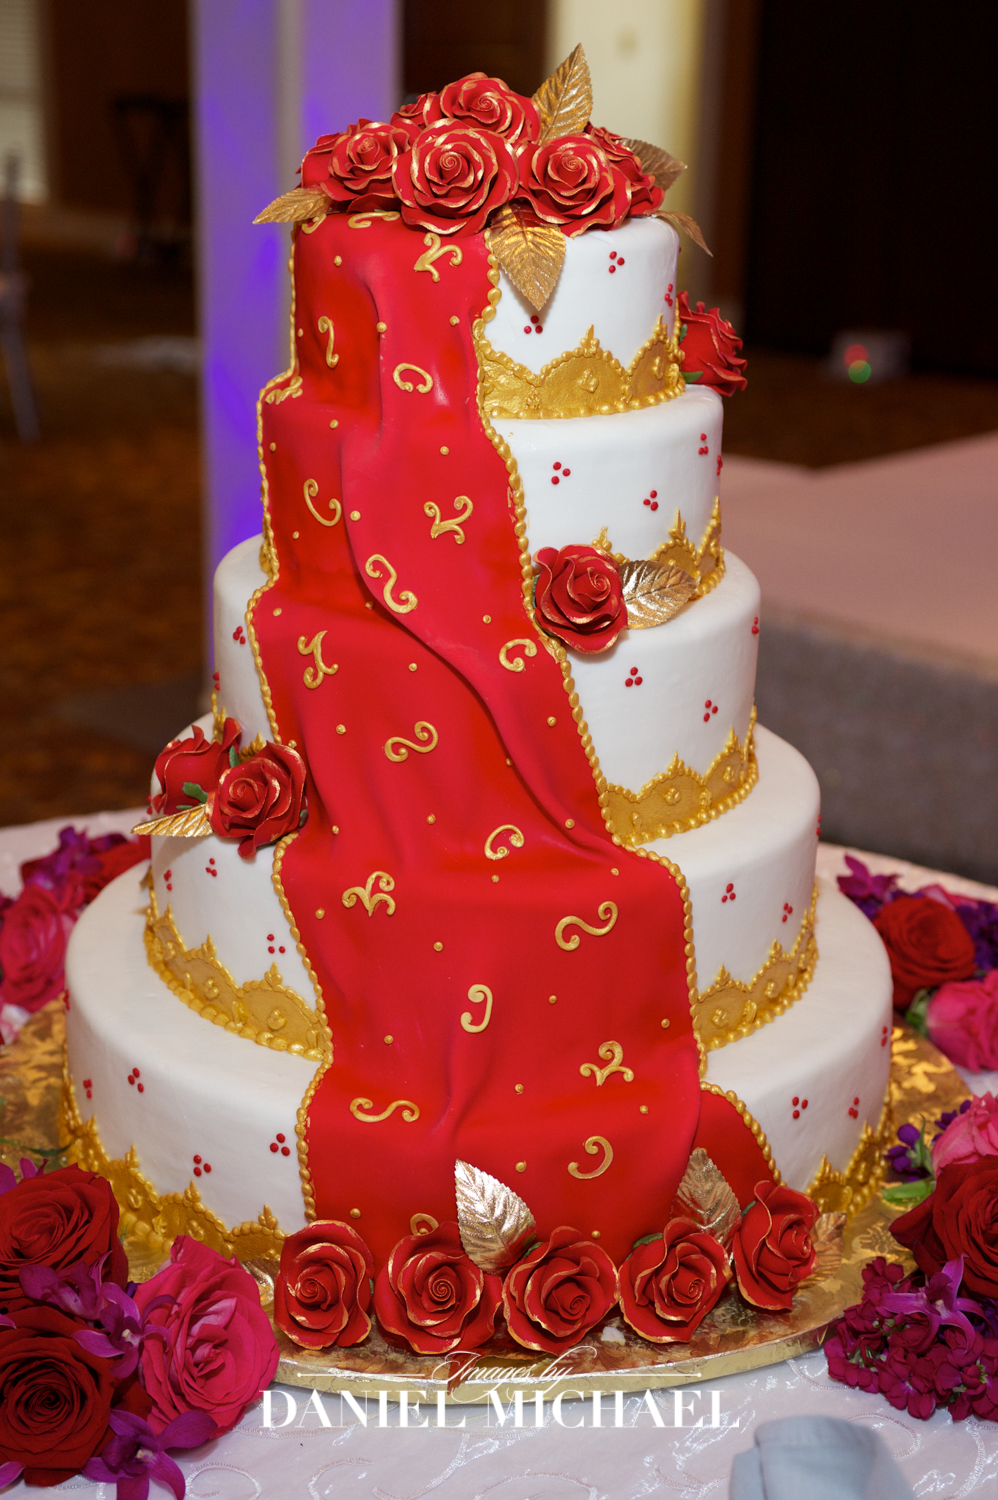 Indian Wedding Cake